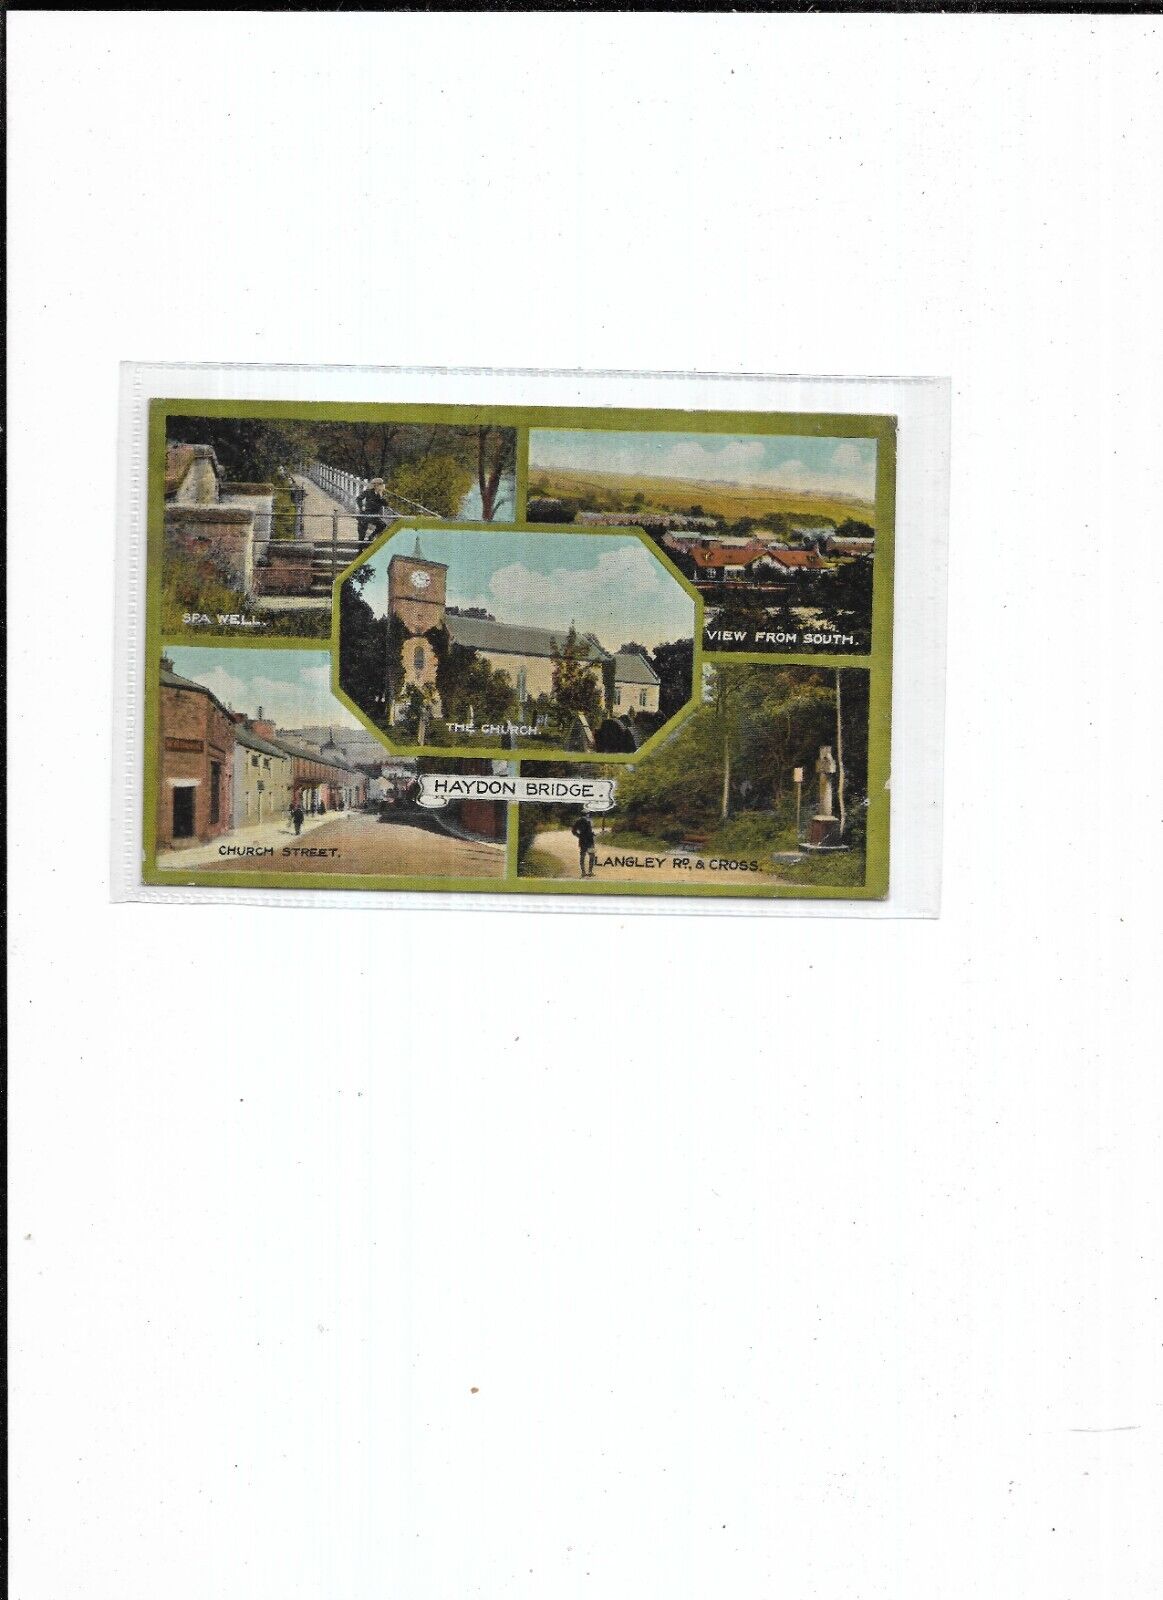 House Clearance - Northumberland Multiview Service "Haydon Bridge" Postmarked 1920